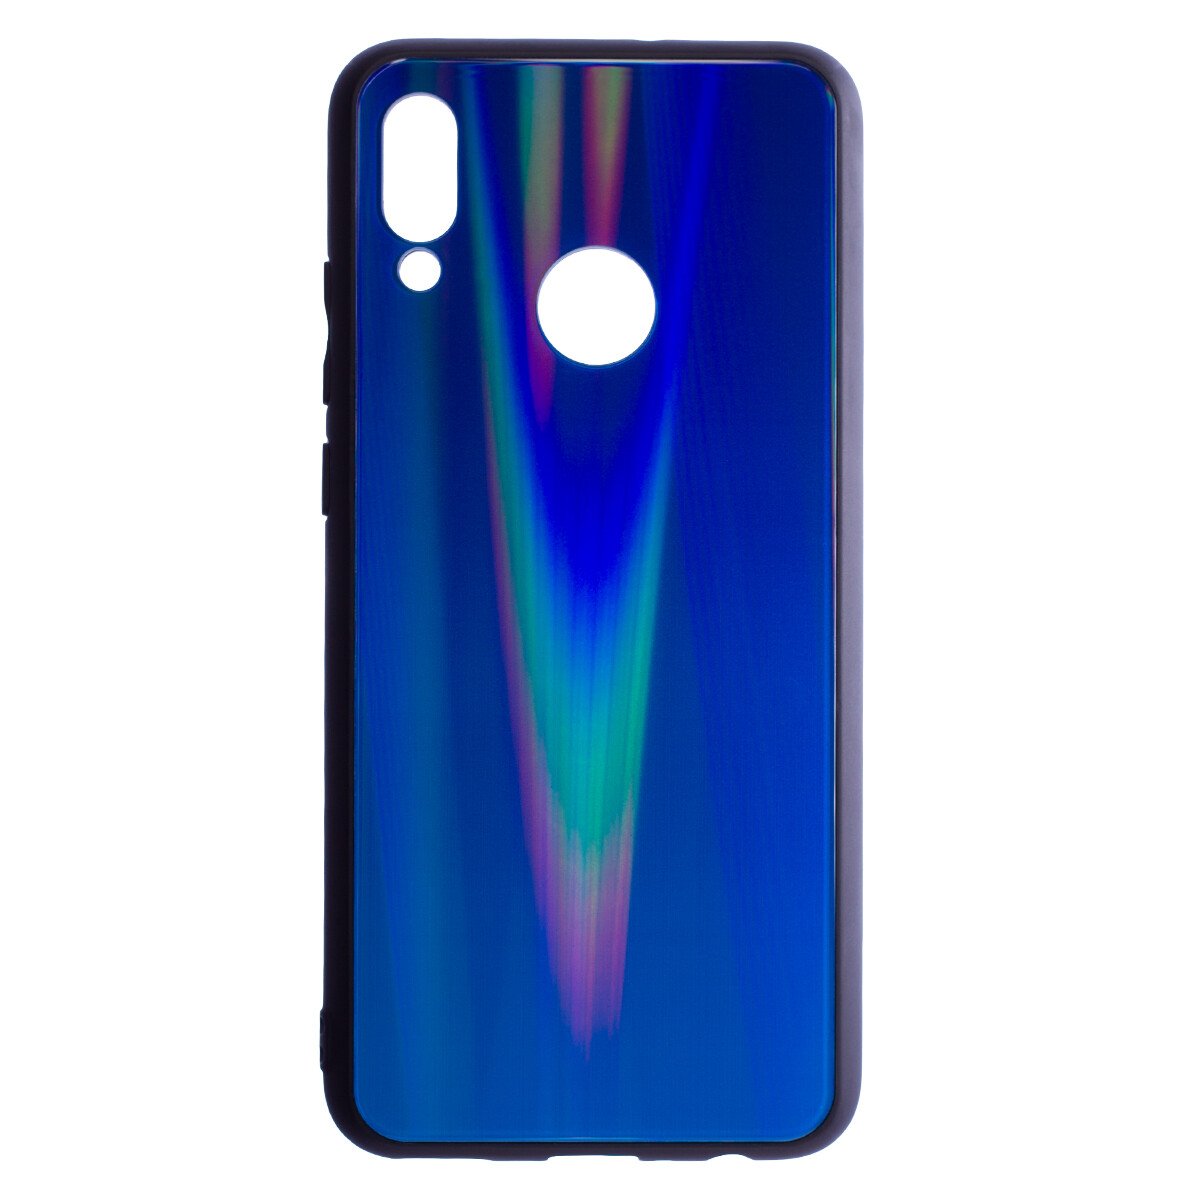 Husa Spate Oglinda Huawei P Smart 2019, Albastru thumb